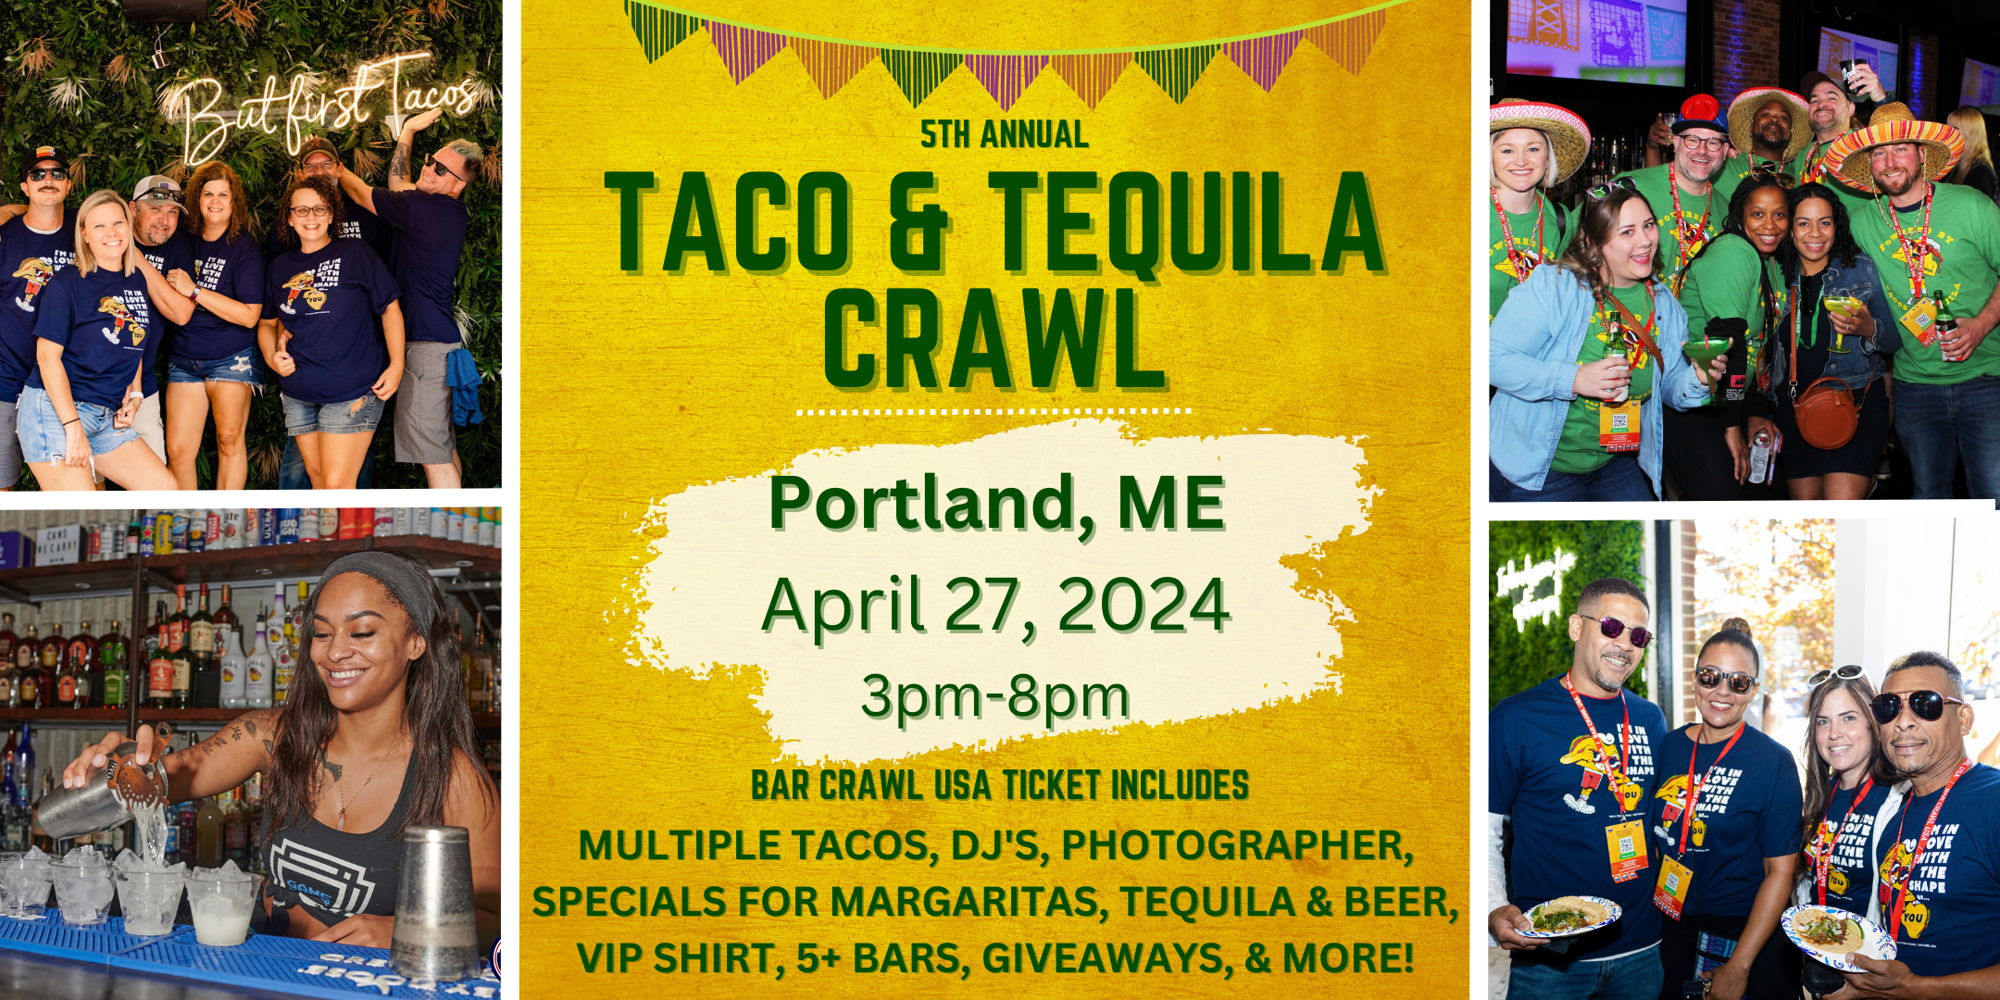 Portland Taco & Tequila Bar Crawl: 5th Annual promotional image